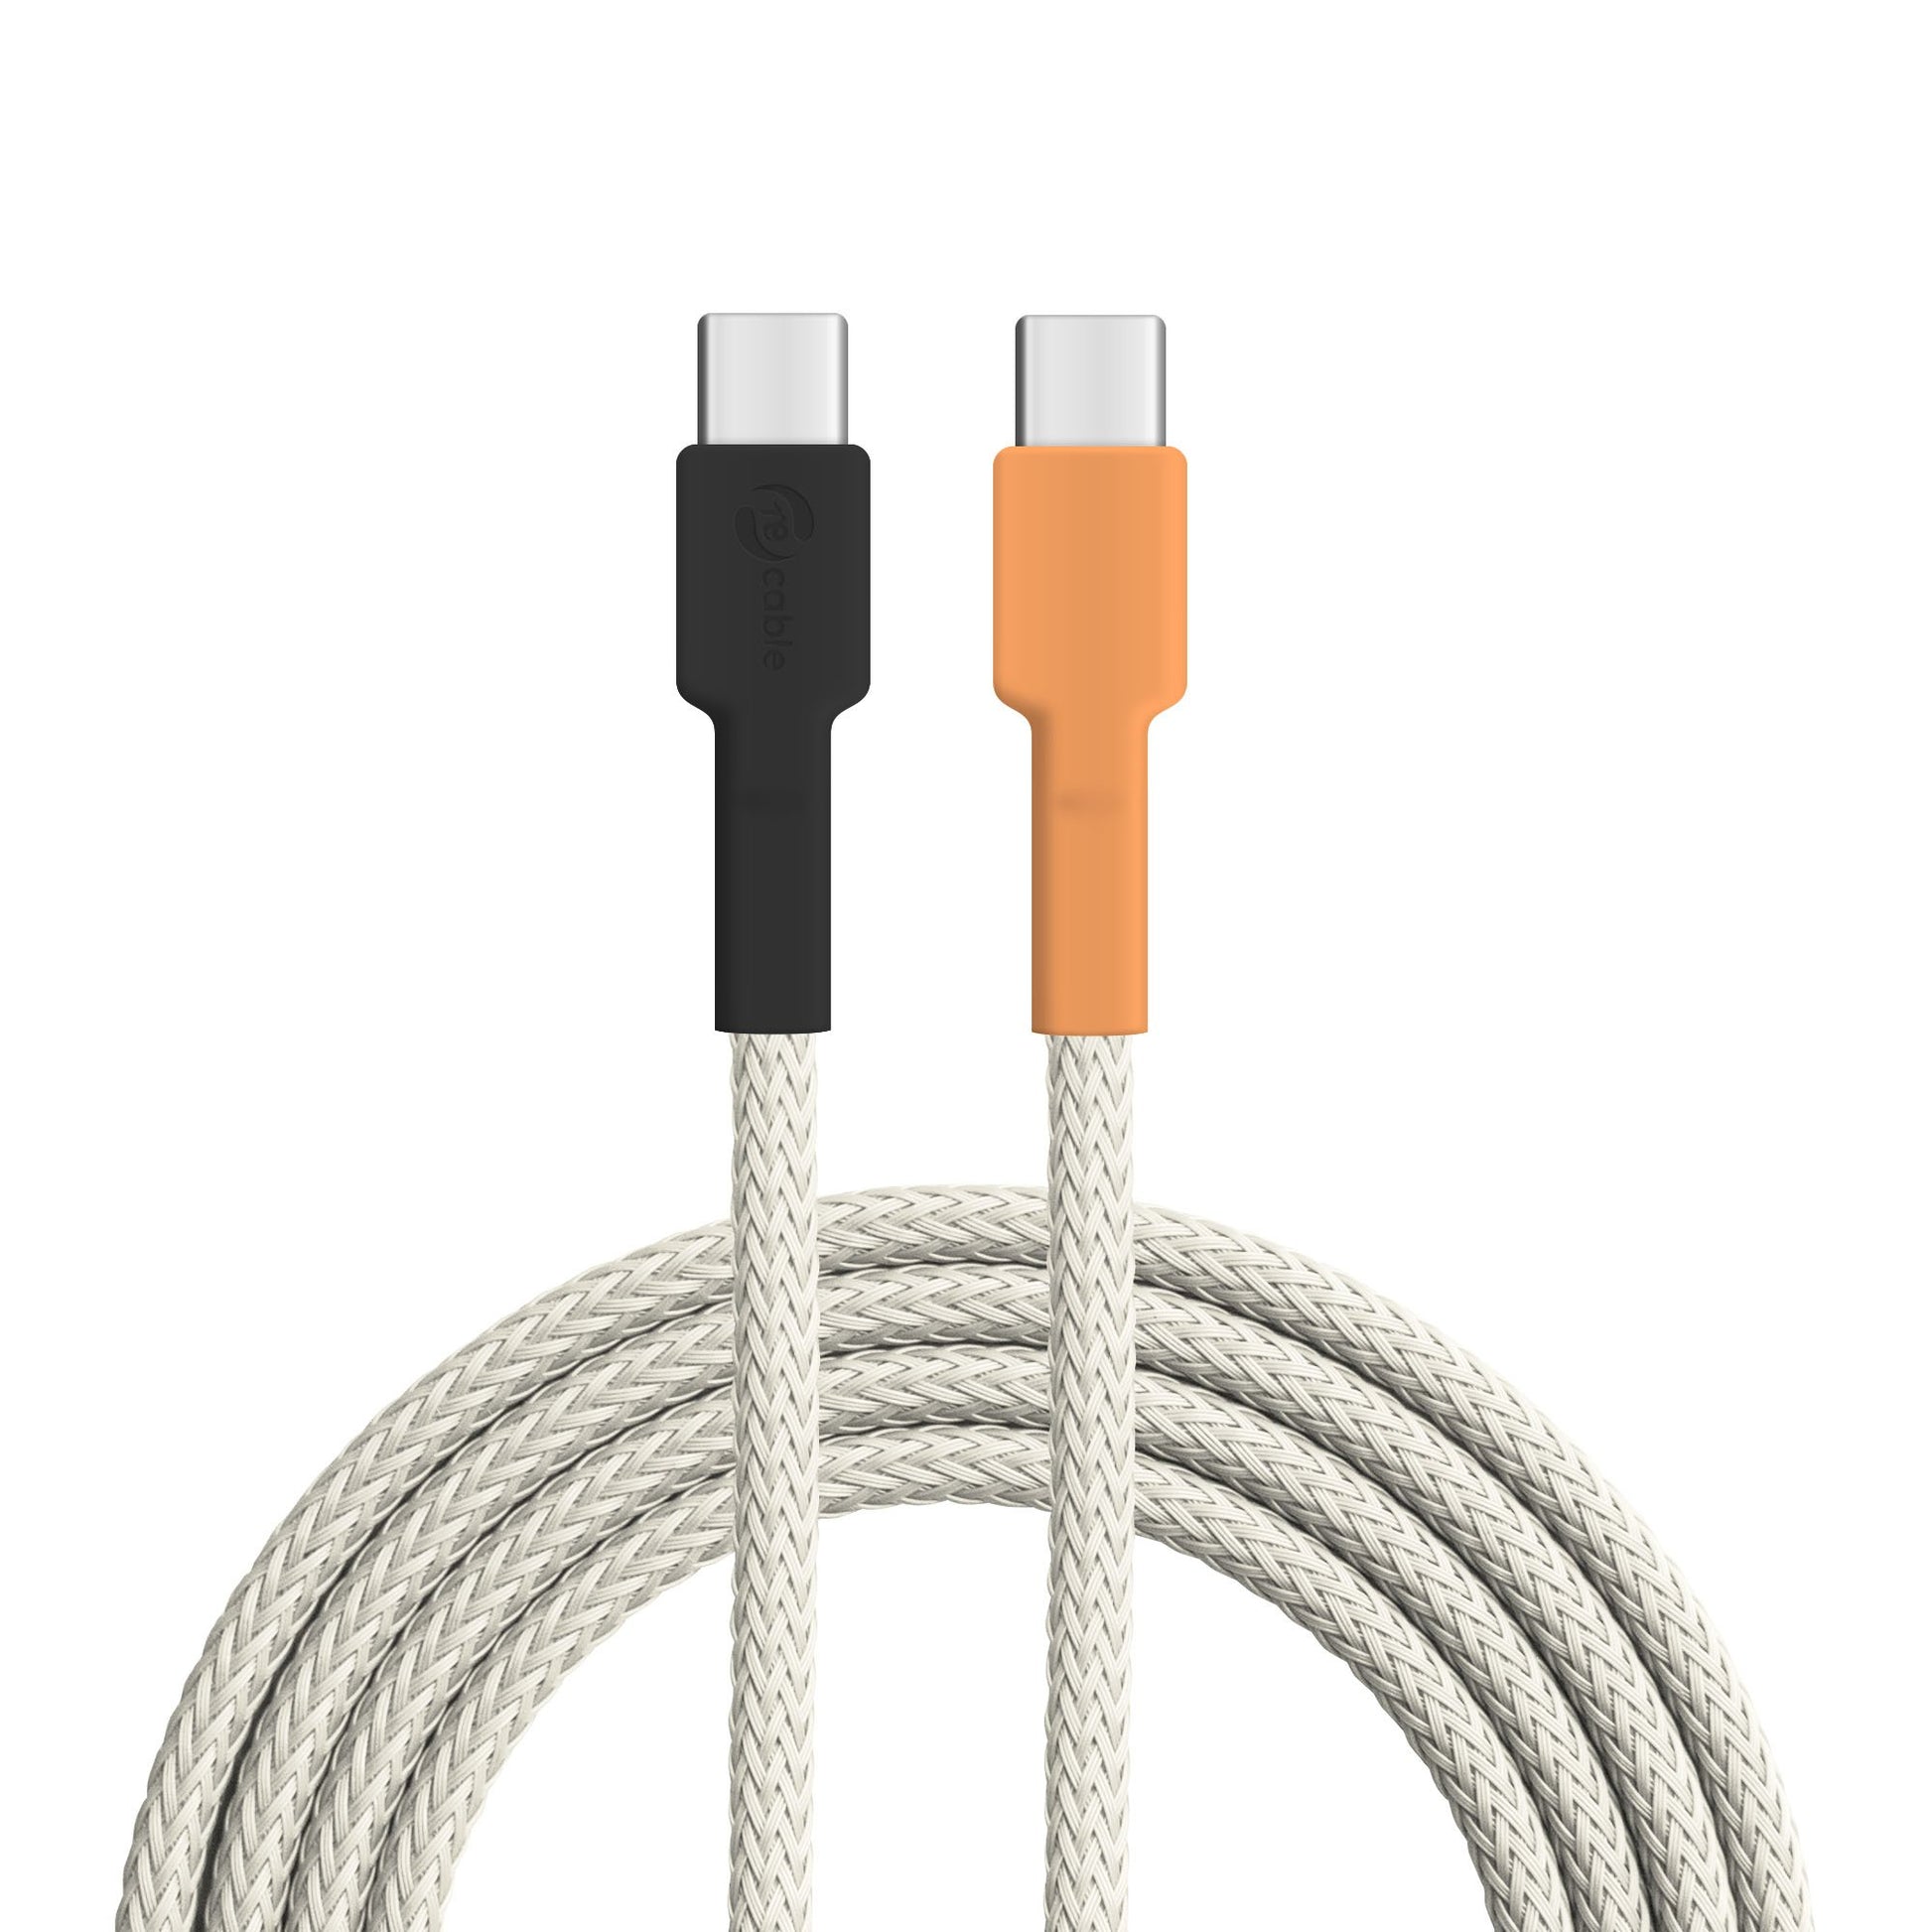 USB-Kabel, Design: Königspinguin, Anschlüsse: USB C auf USB C